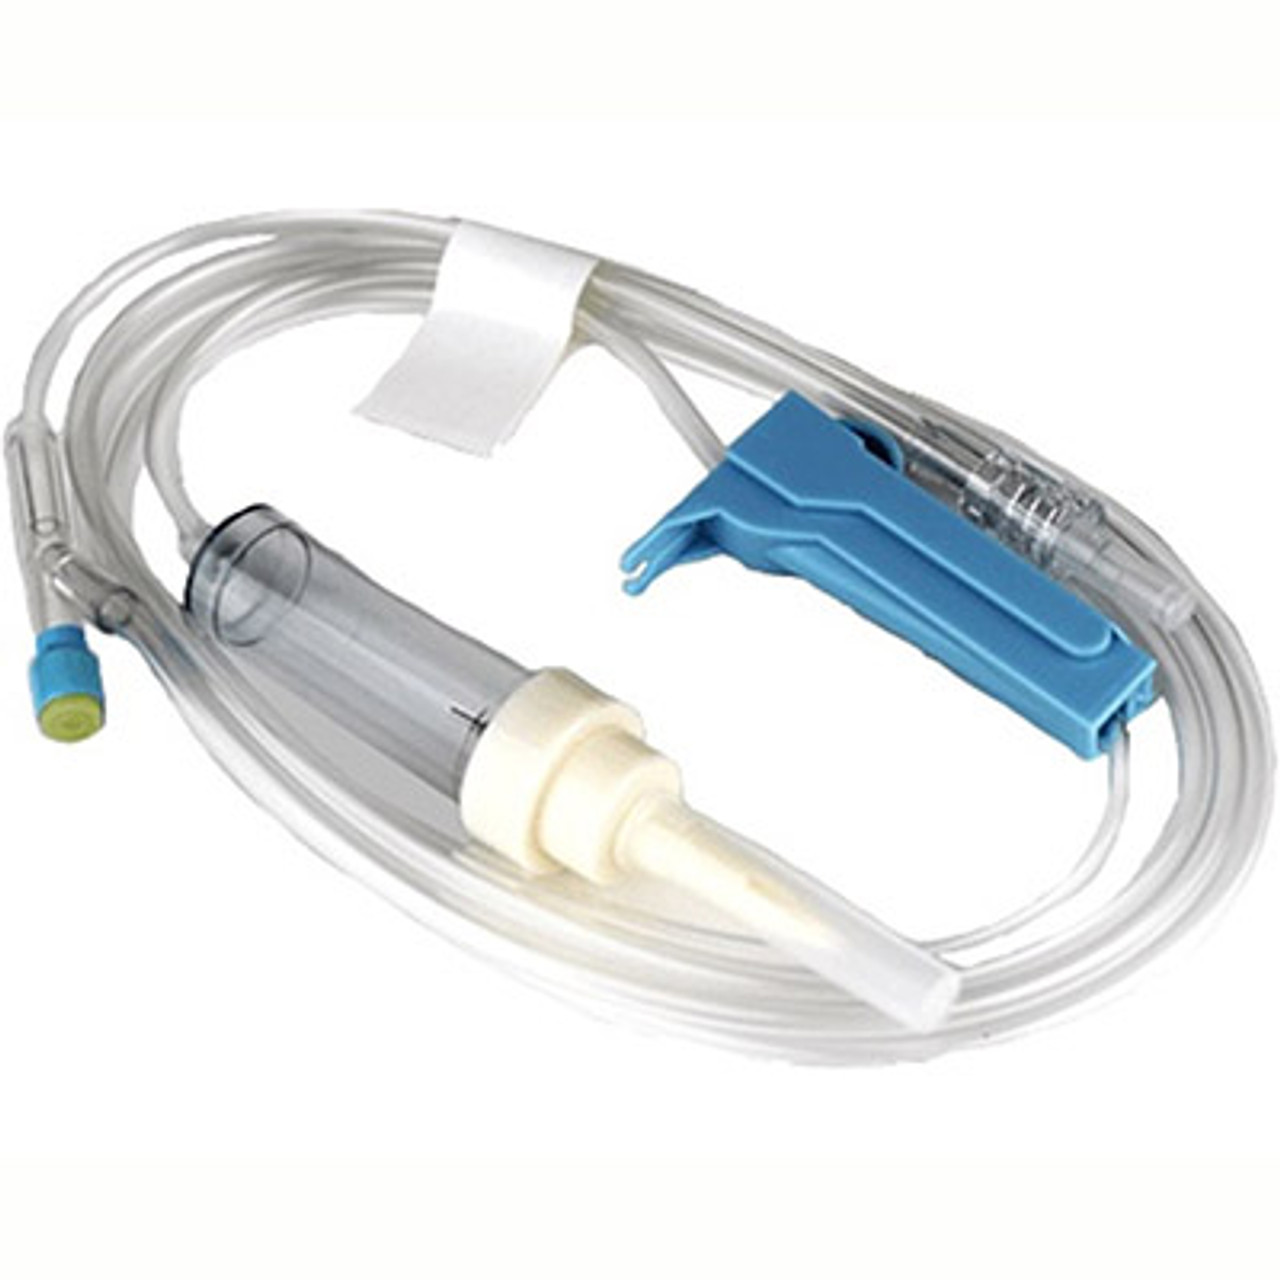 Luer Slip IV Infusion Set with Syringe Needle with Y Site